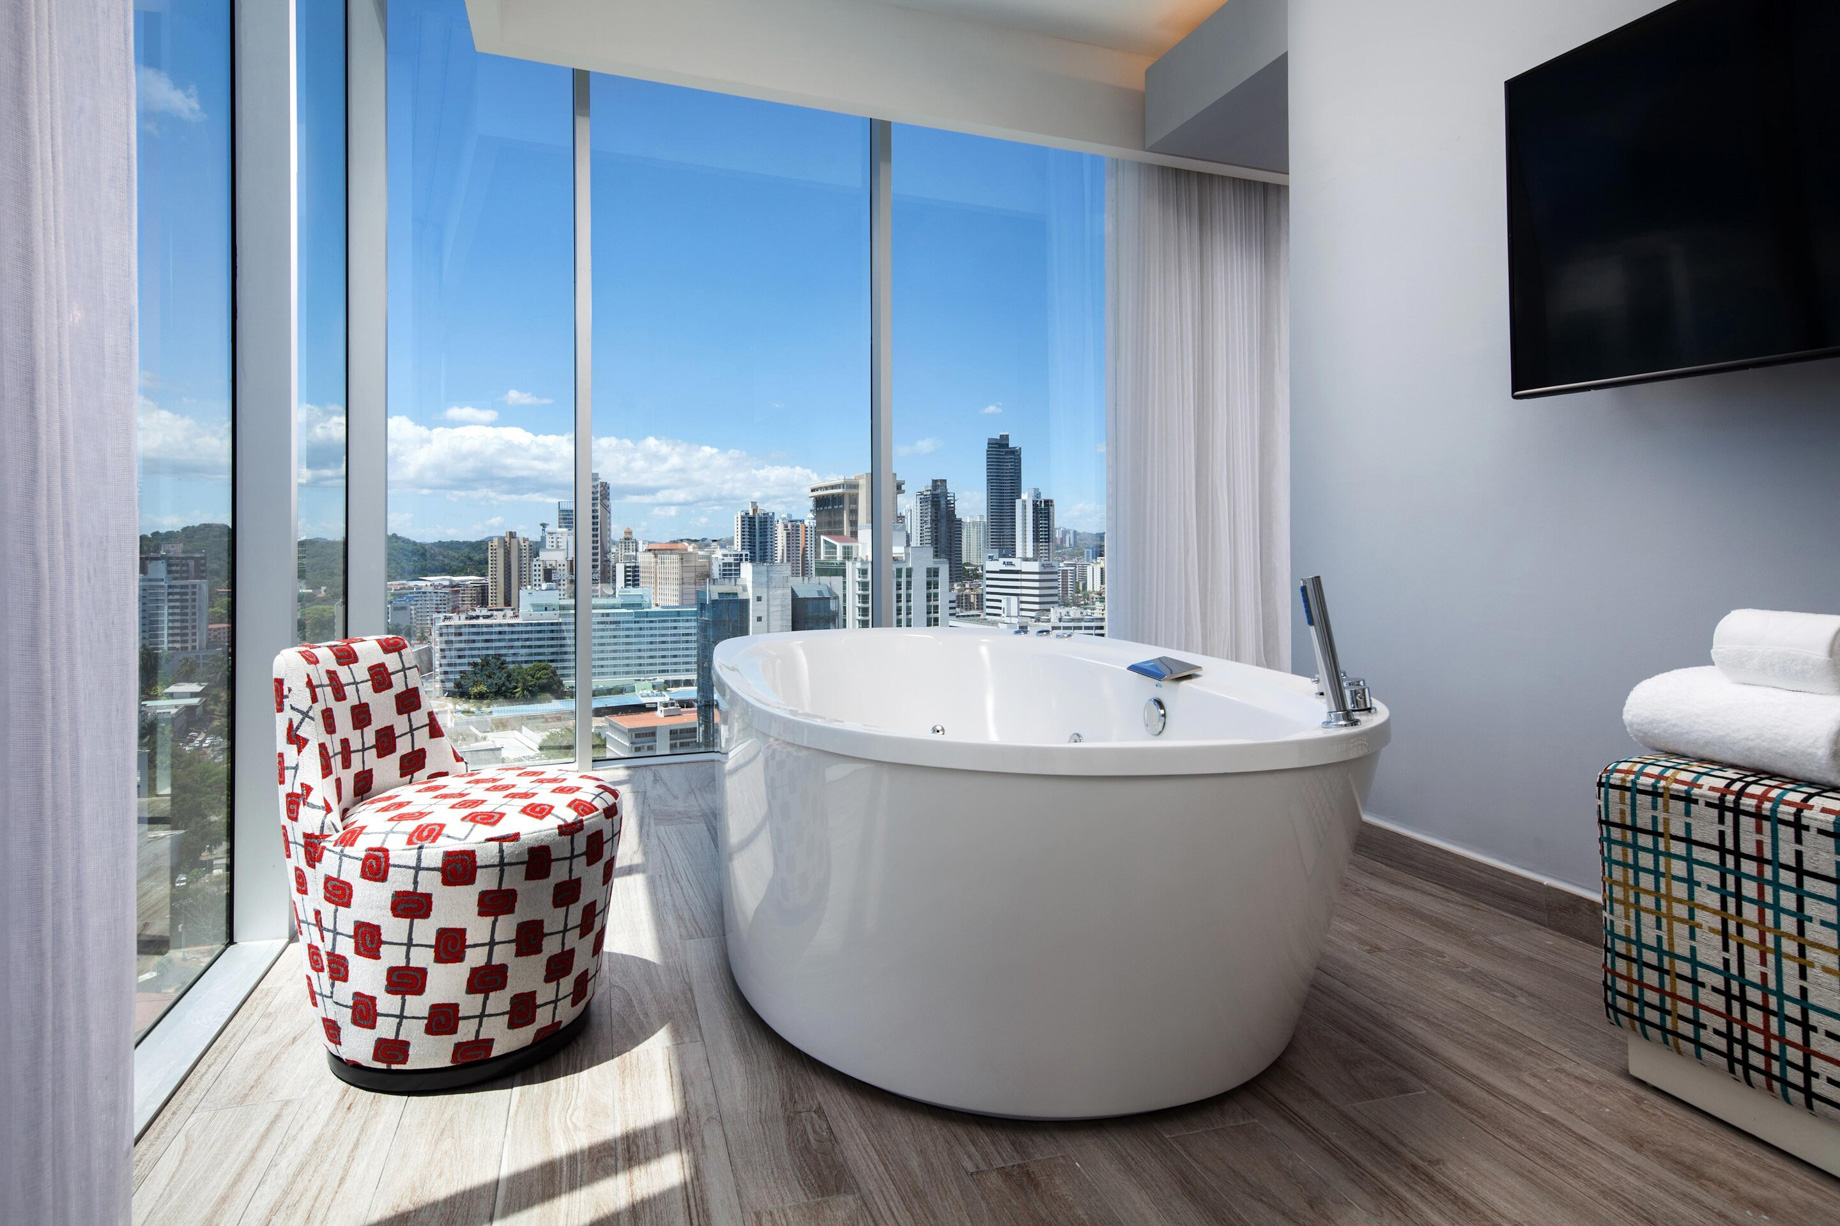 W Panama Hotel – Panama City, Panama – Suite Bathroom Tub